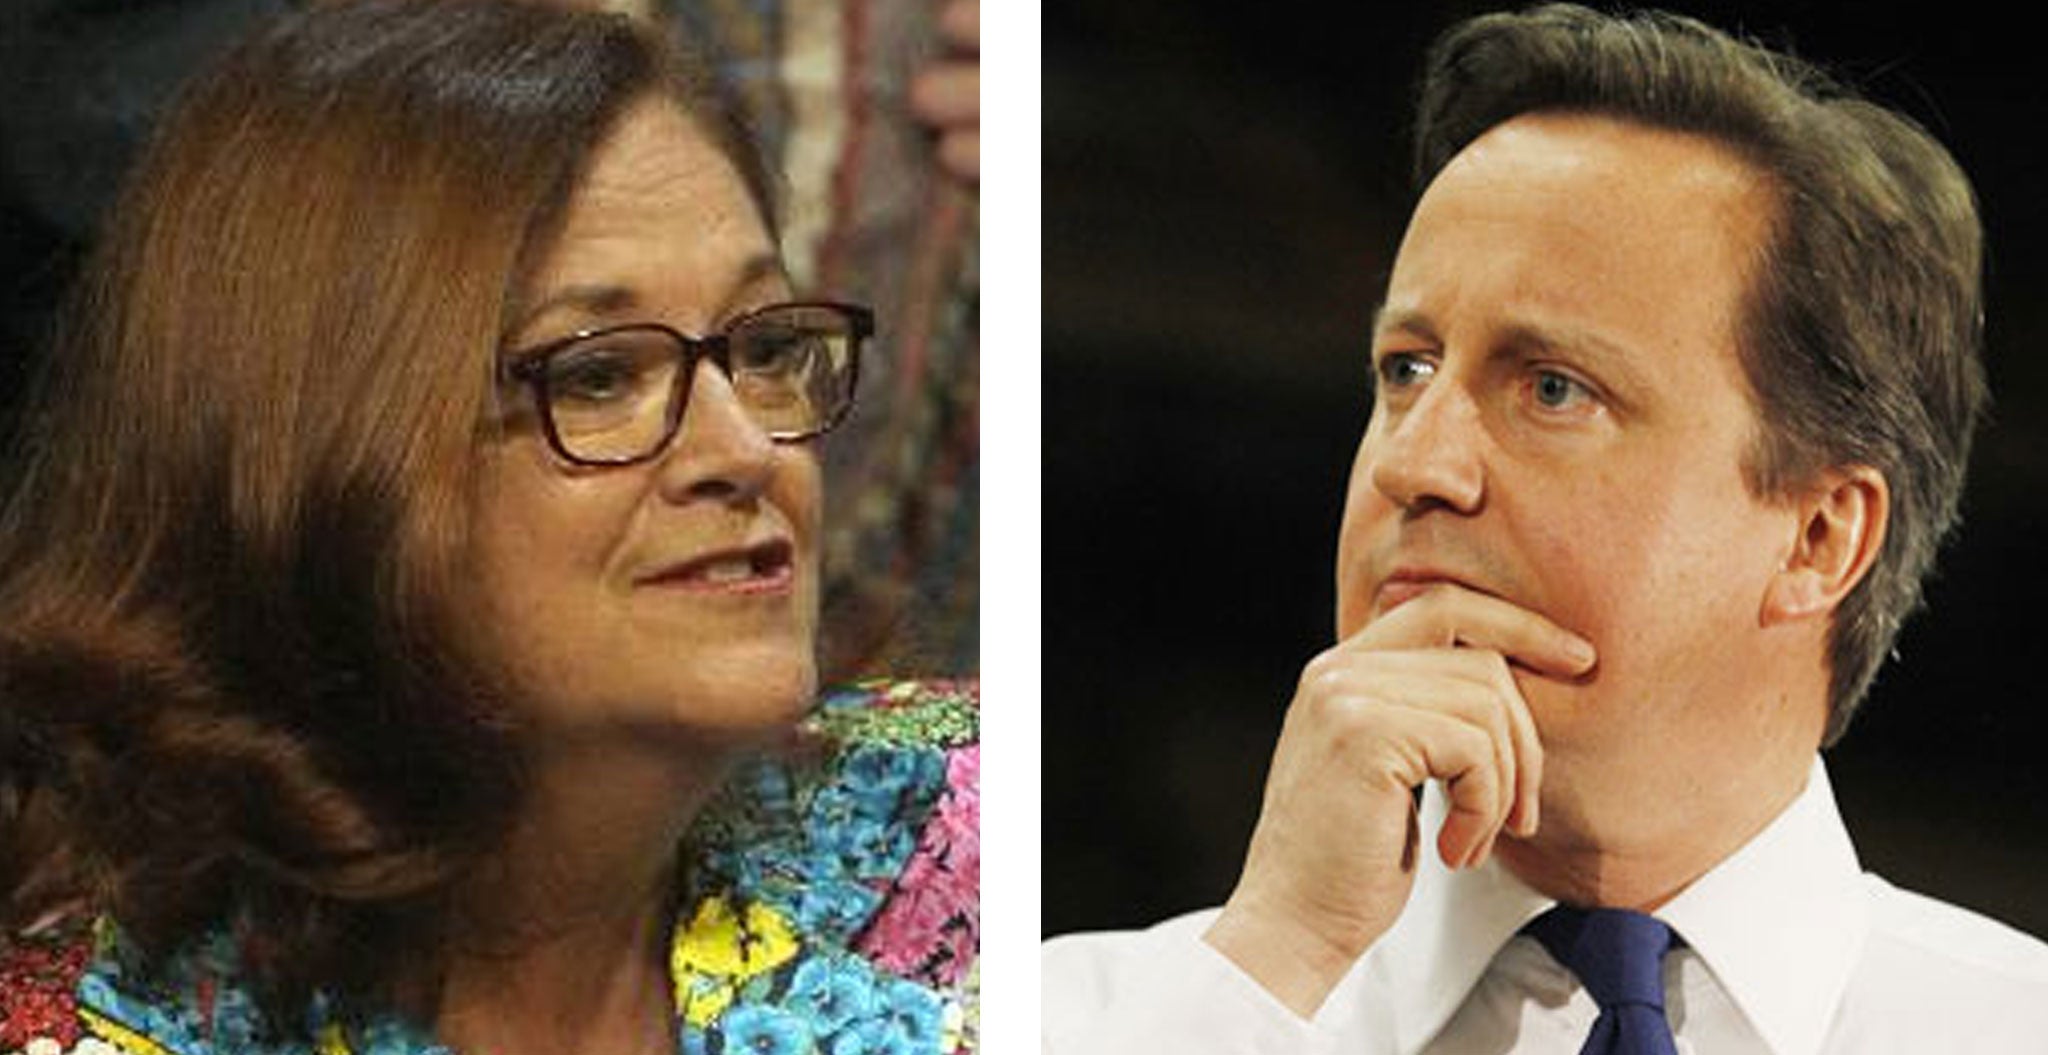 Alicia Castro has launched a shocking attack on David Cameron